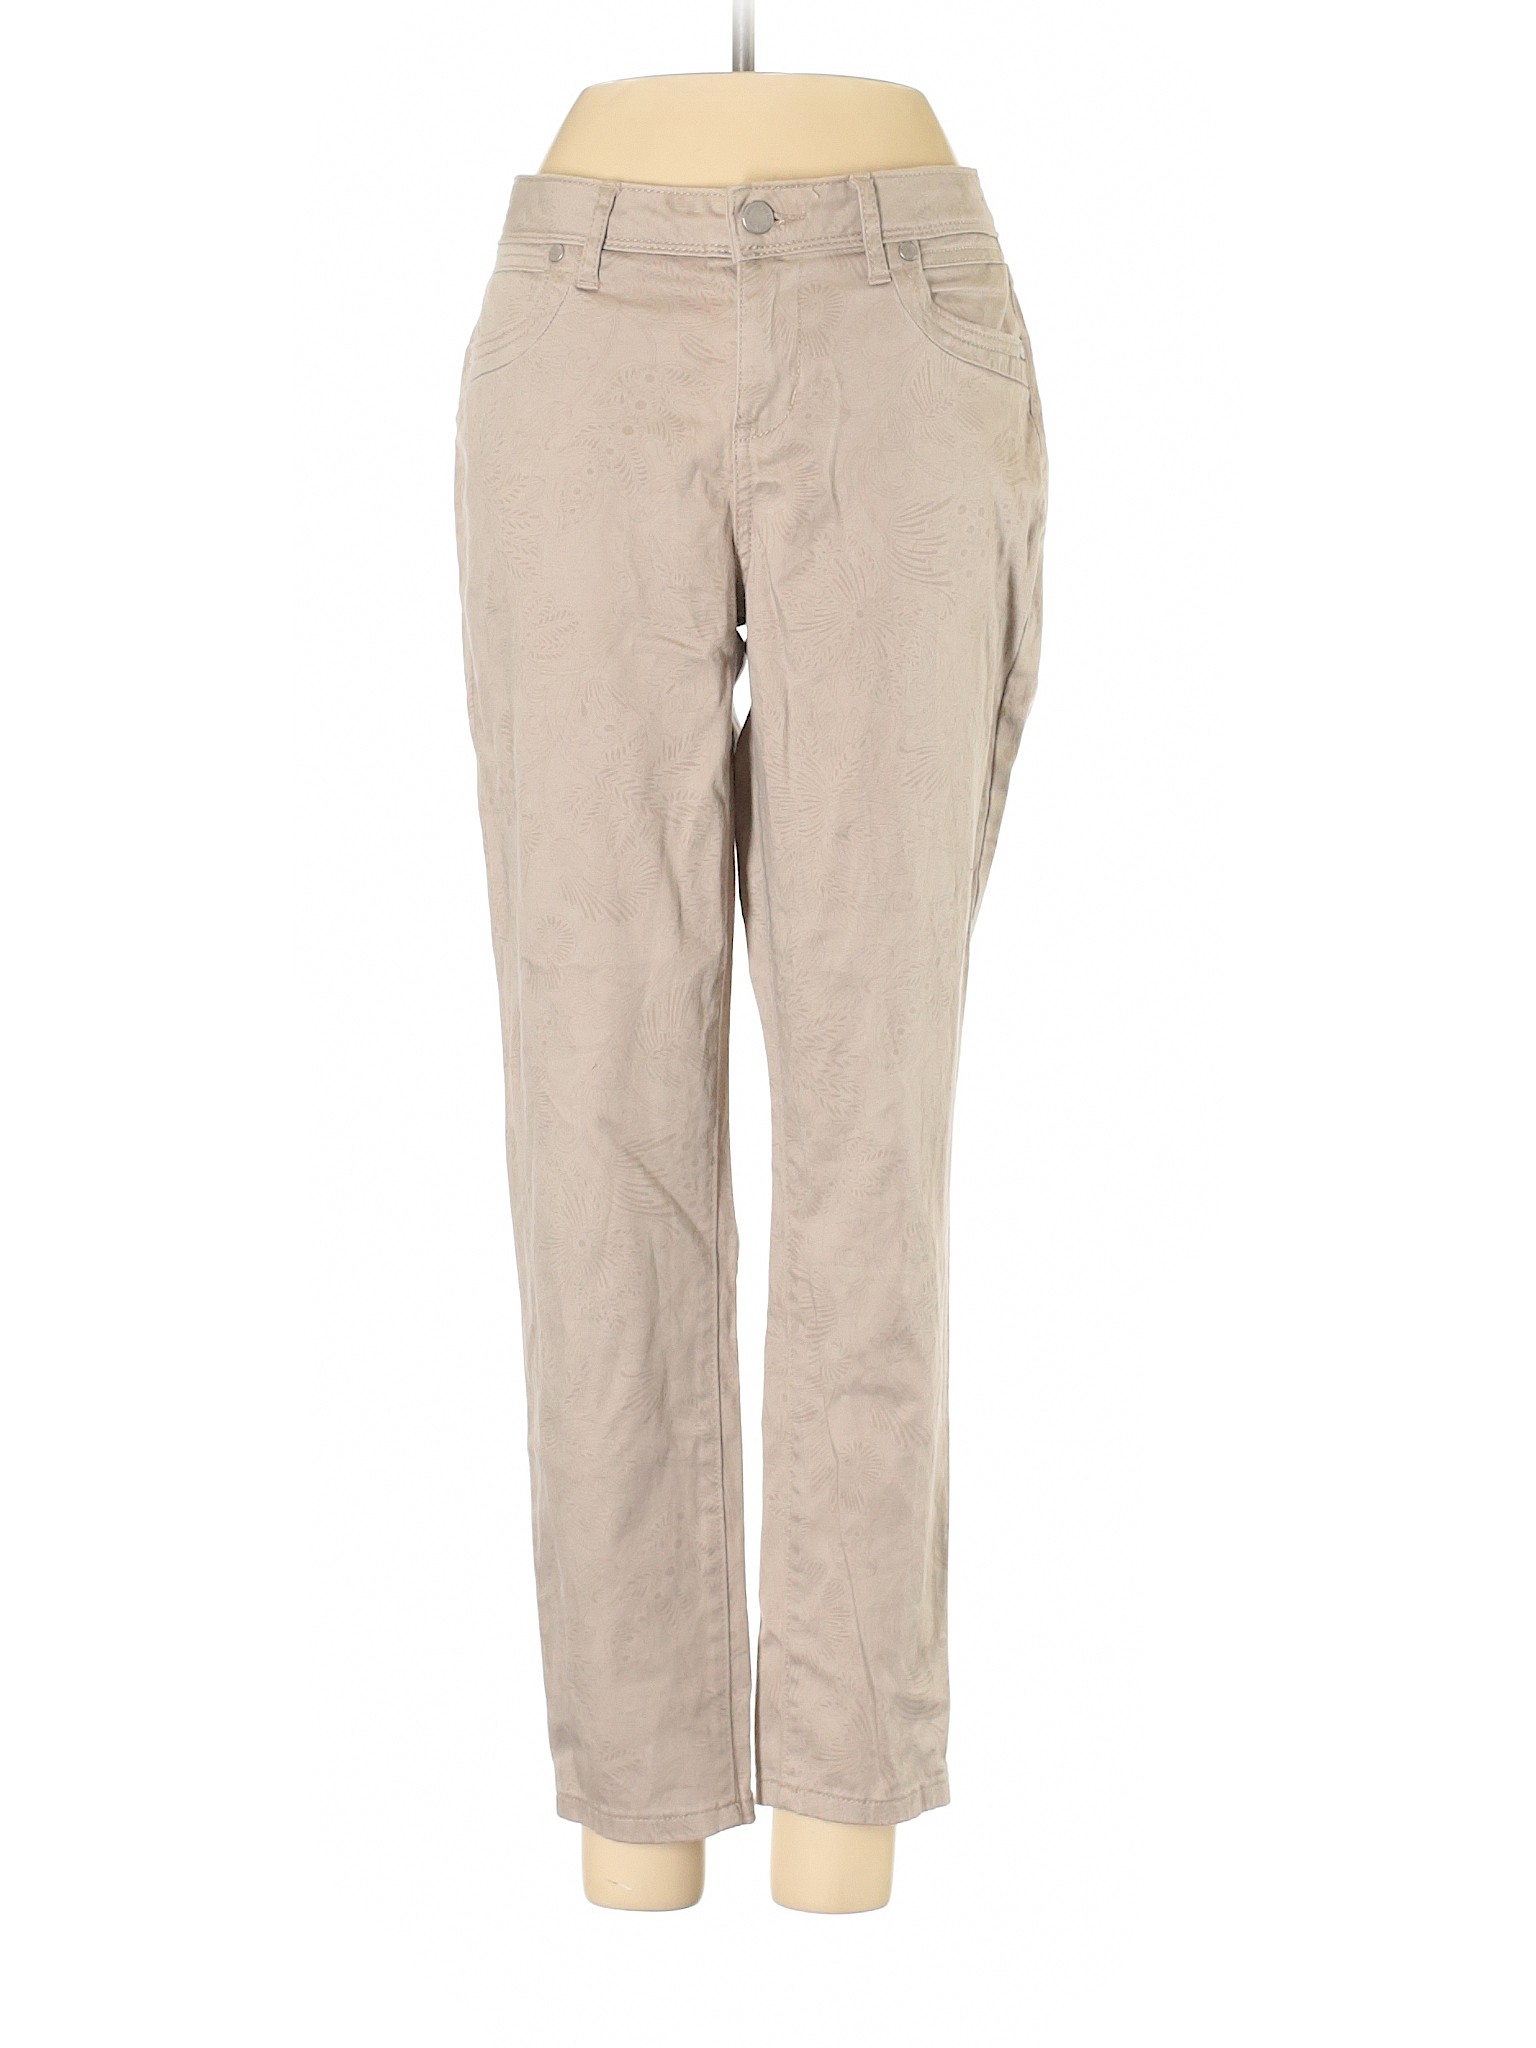 Simply Vera Vera Wang Women Brown Jeans 4 | eBay